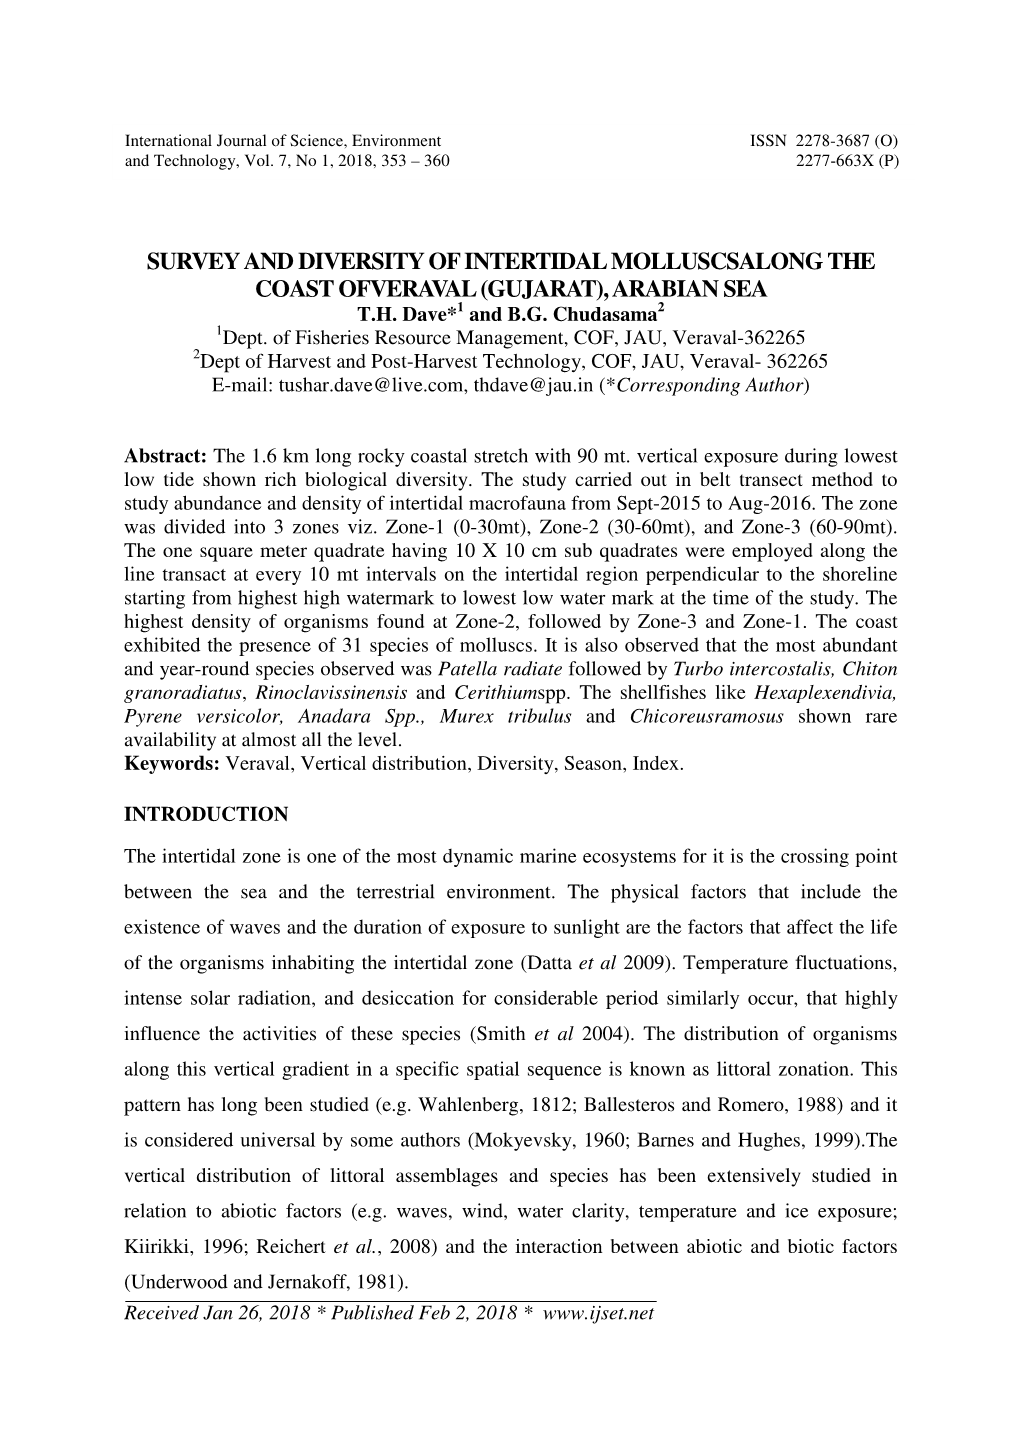 Survey and Diversity of Intertidal Molluscsalong the Coast Ofveraval (Gujarat), Arabian Sea T.H